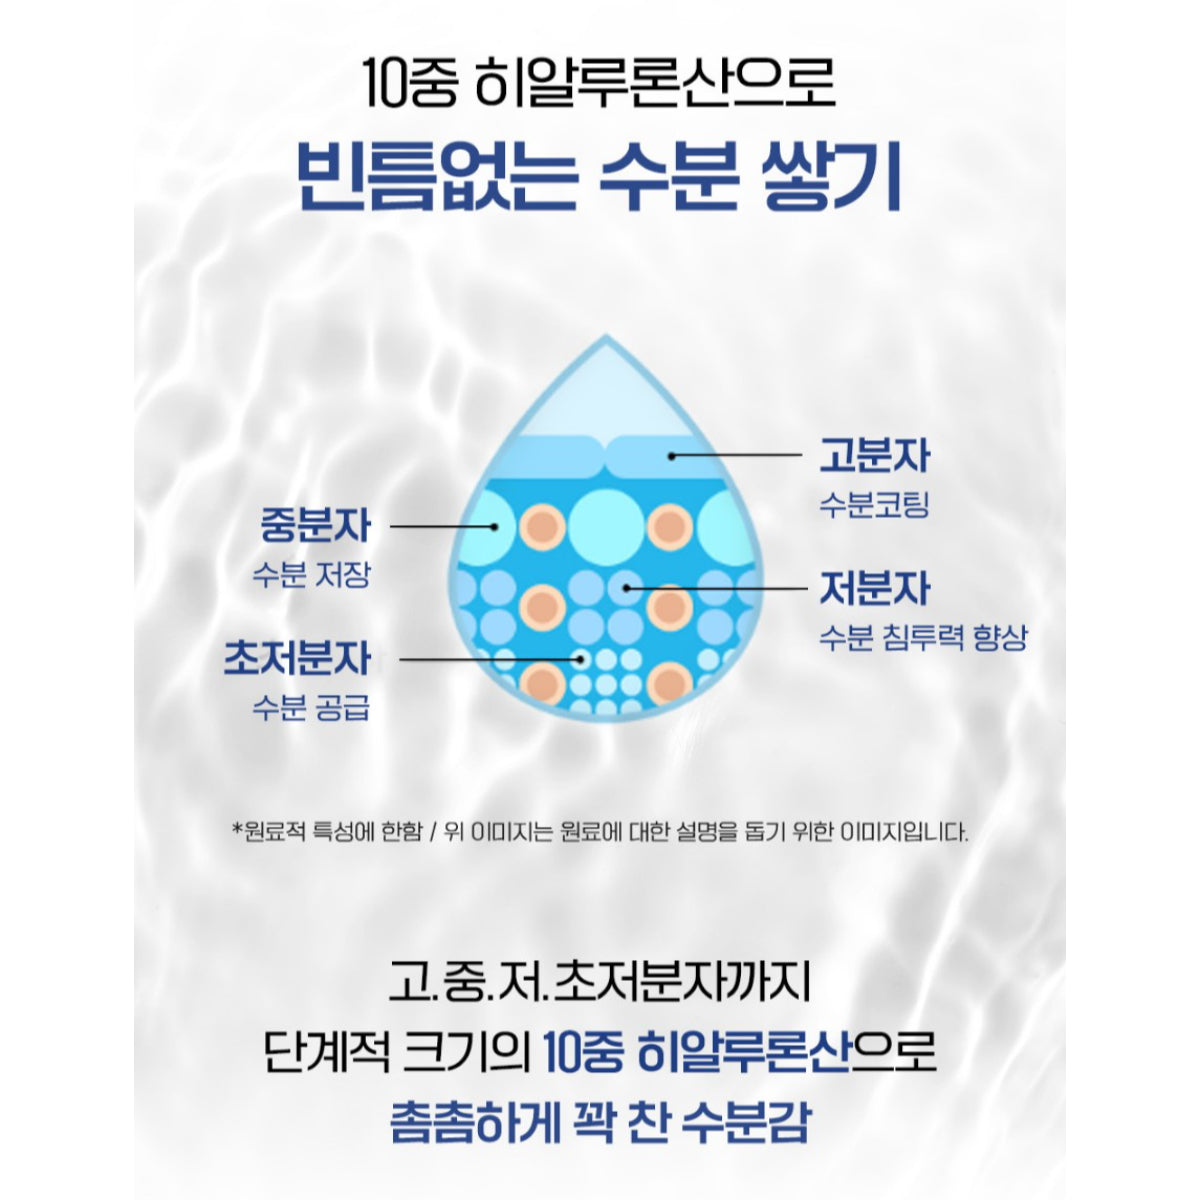 SUNGBOON EDITOR Wild Grape Vita C Dark Spot Cream 50ml (1.69 fl.oz.) Vitamin C Tranexamic Acid Niacinamide Cica / from Seoul, Korea